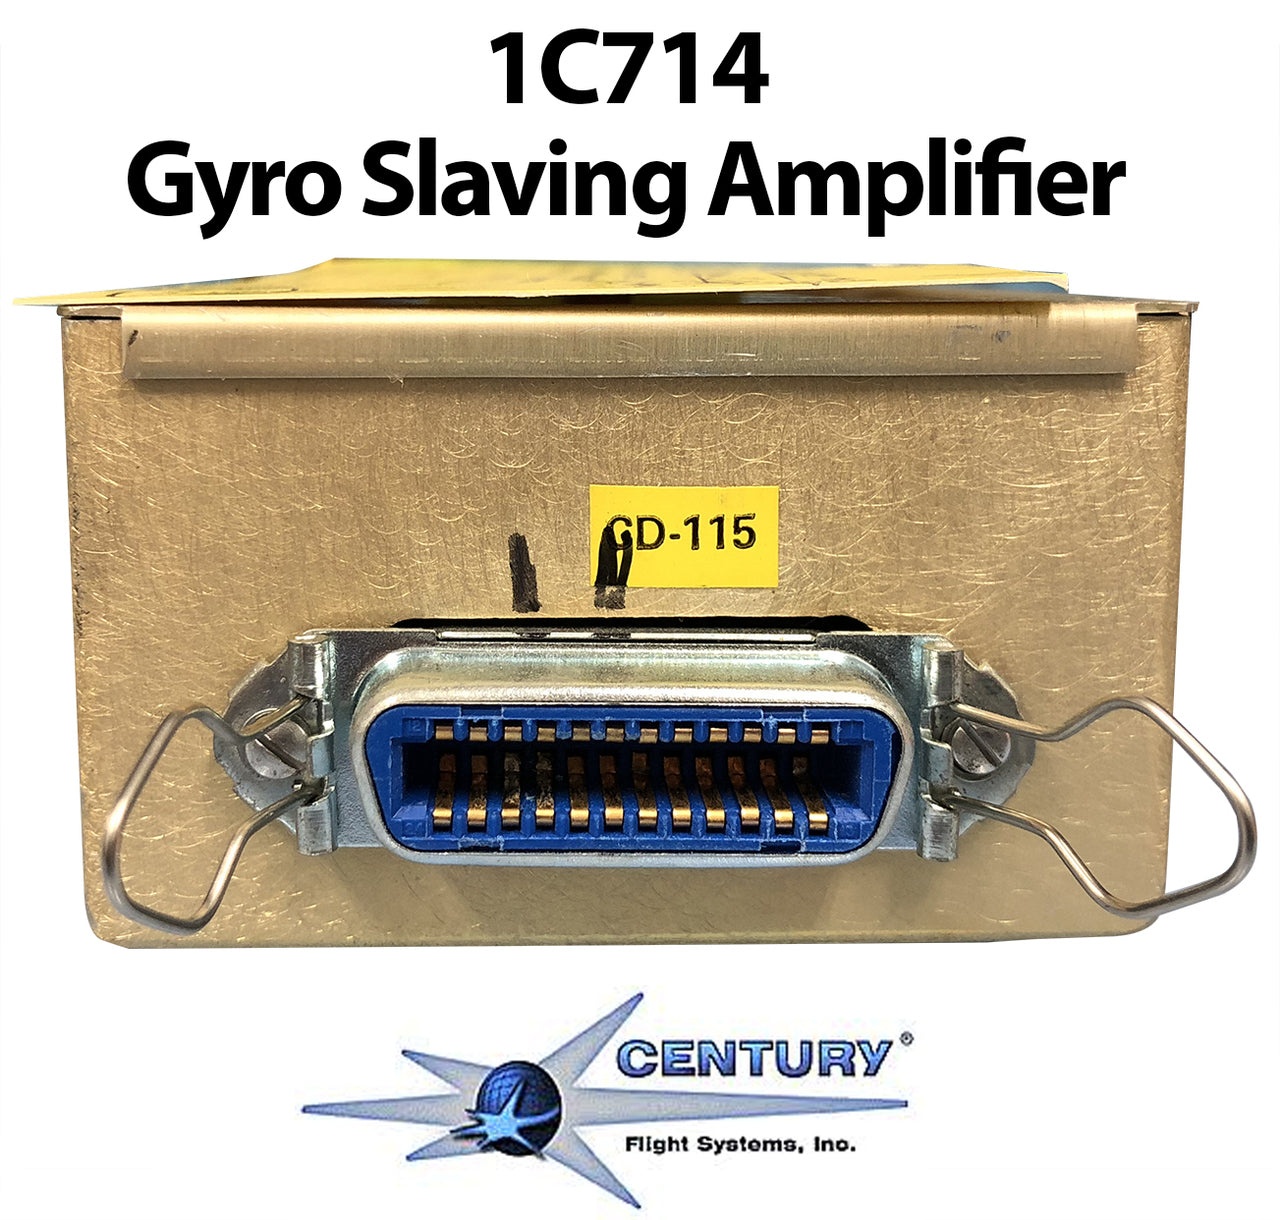 Century Gyro Slaving Amplifier - Part Number: 1C714